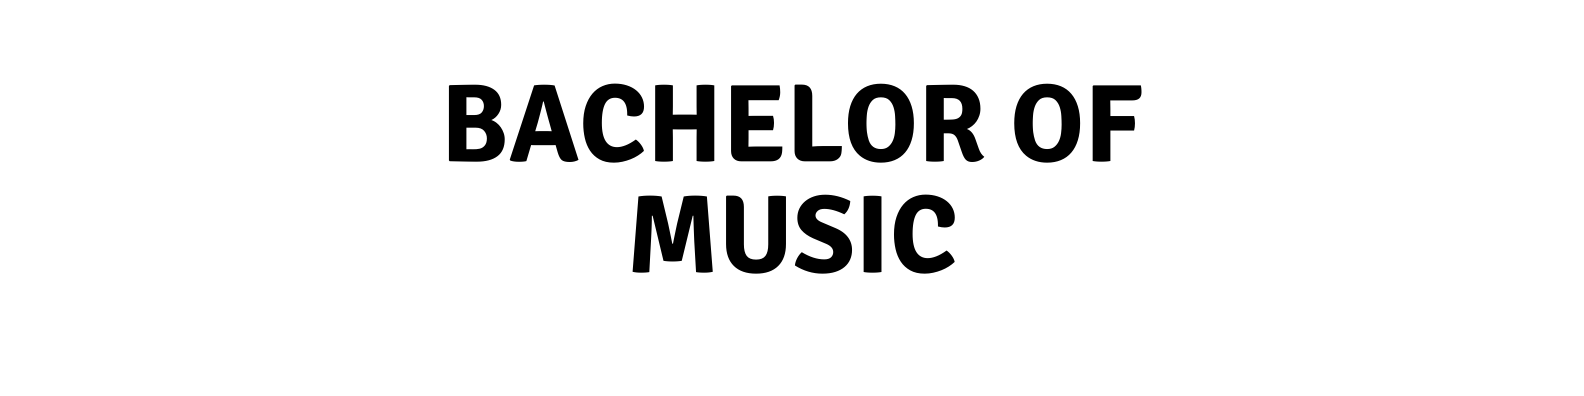 Banner of Bachelor of Music 